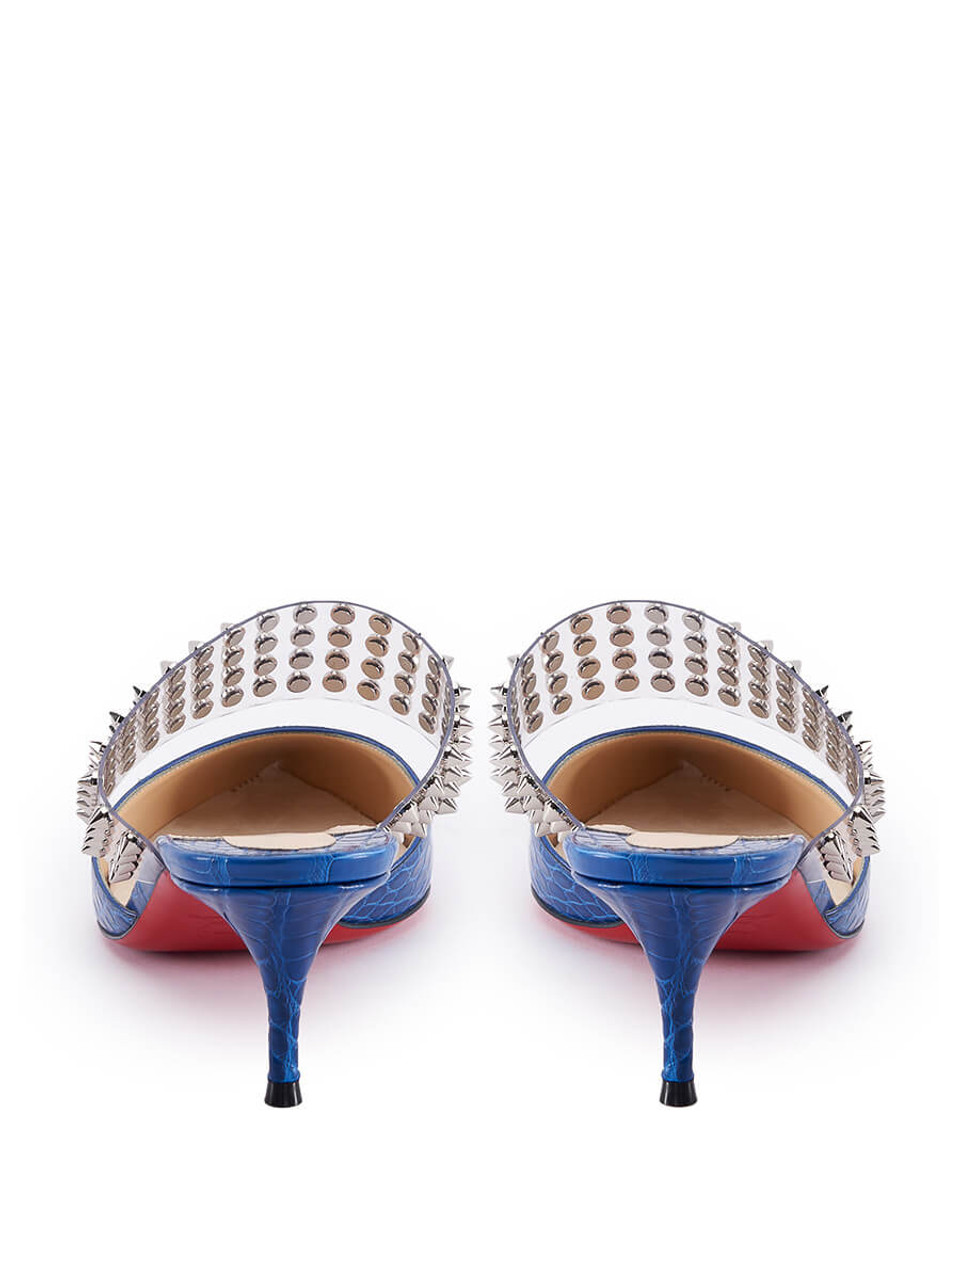 Women Christian Louboutin Levita Spiked Court Shoes - Blue Size UK 6 US 9 EU 39